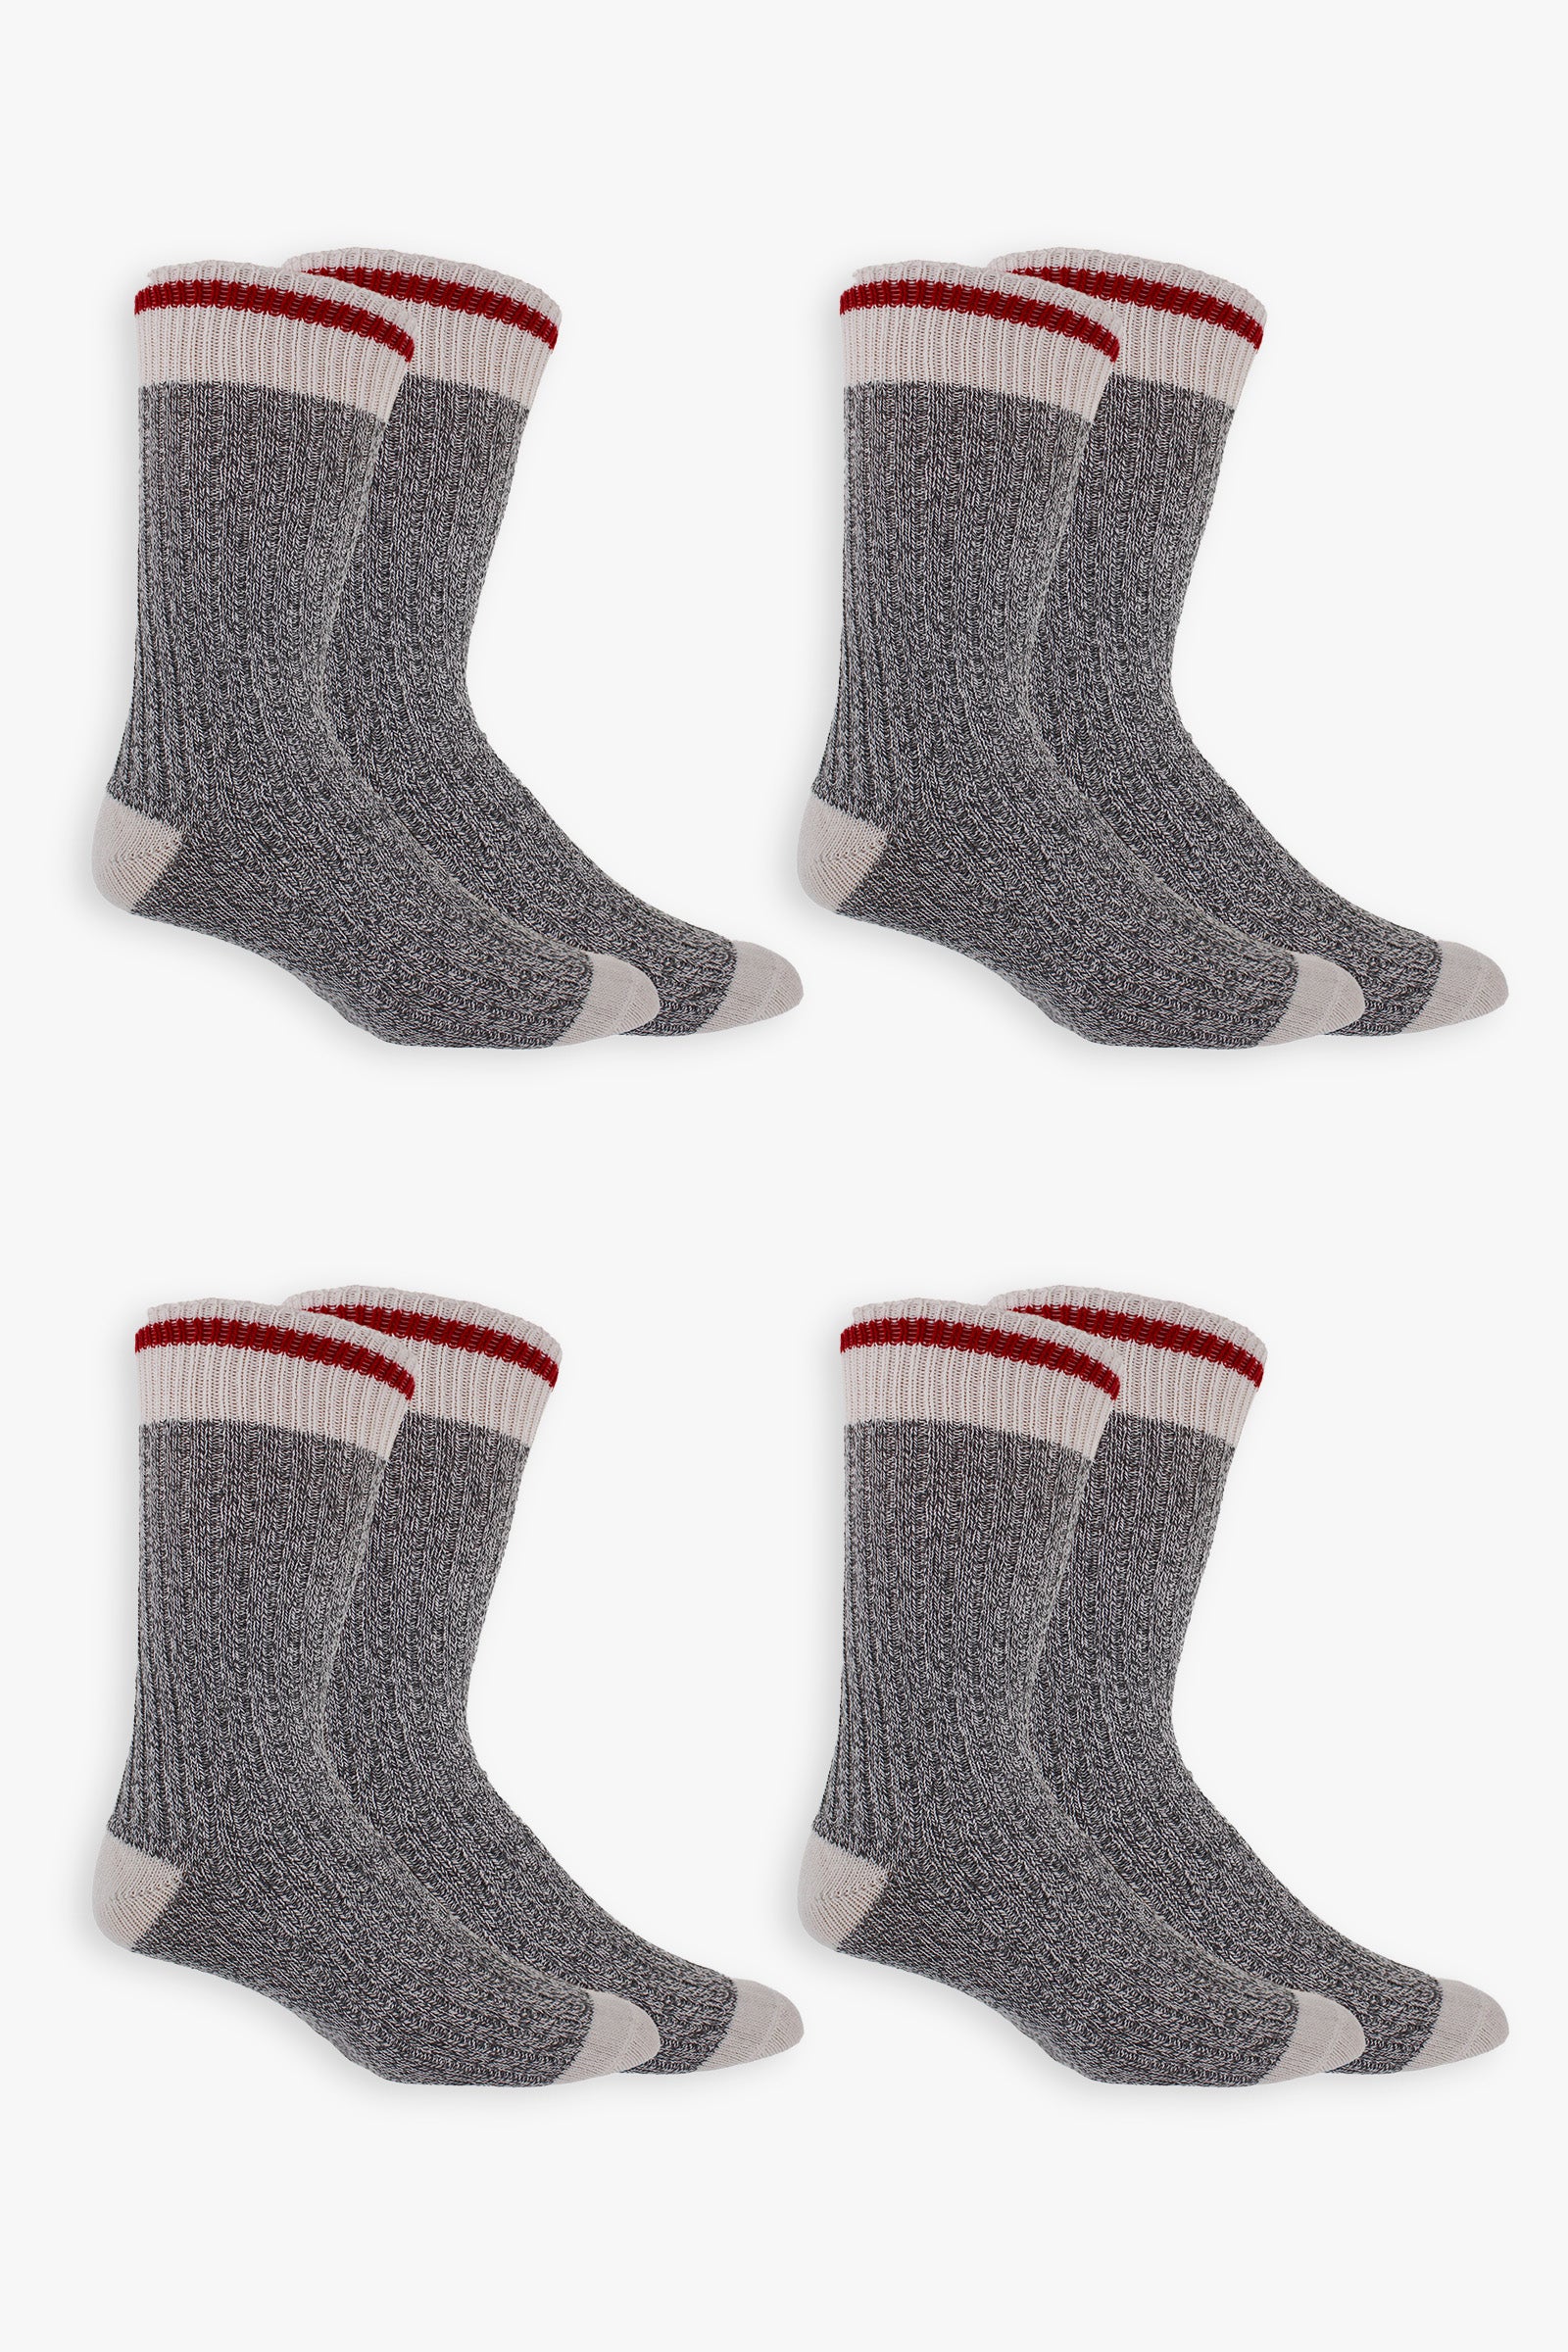 Grey Men's Winter Boot Socks